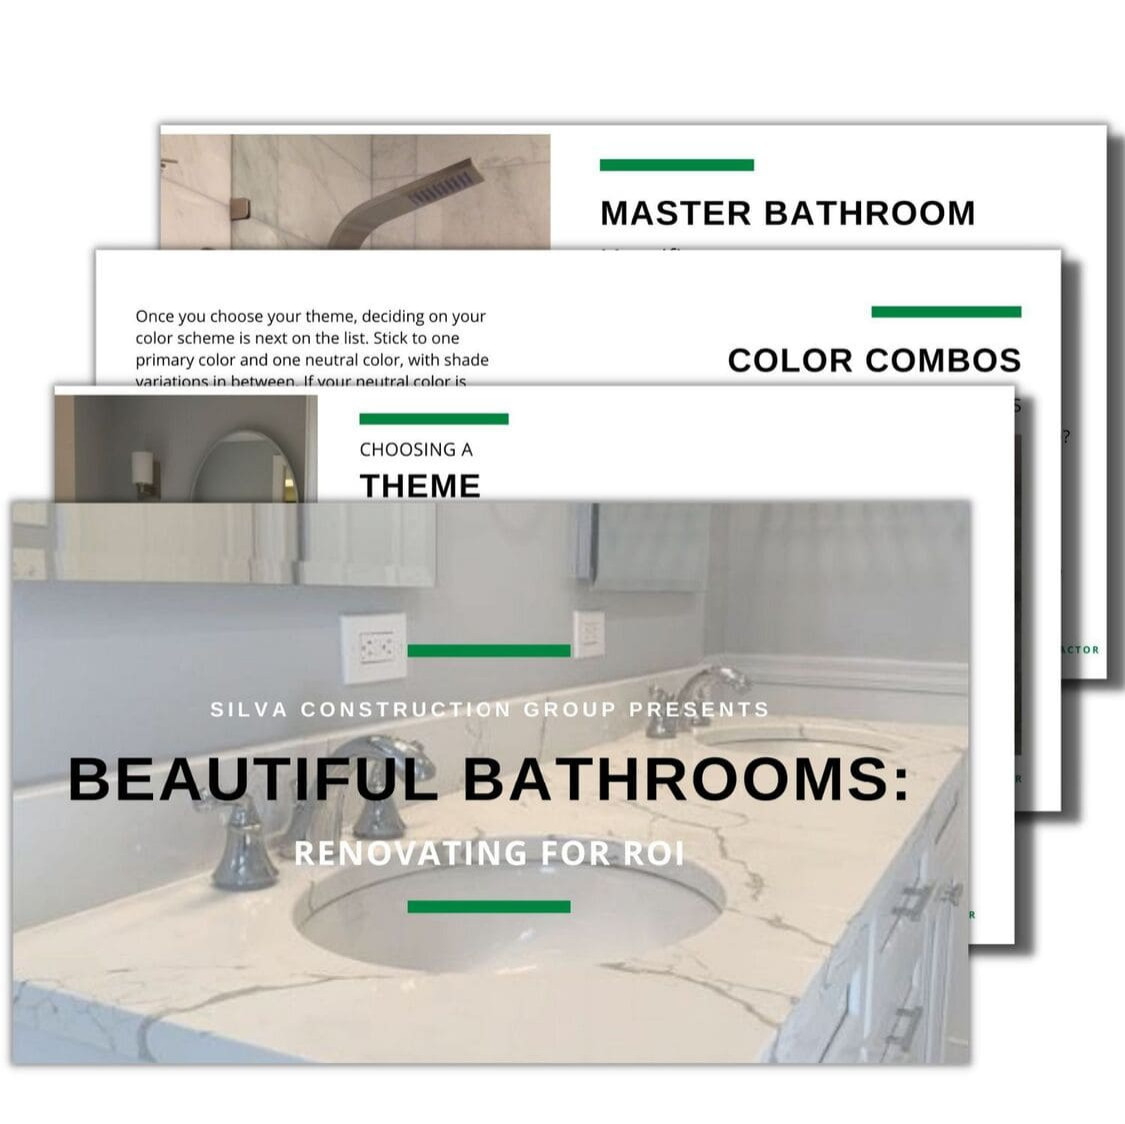 Bathroom design guide